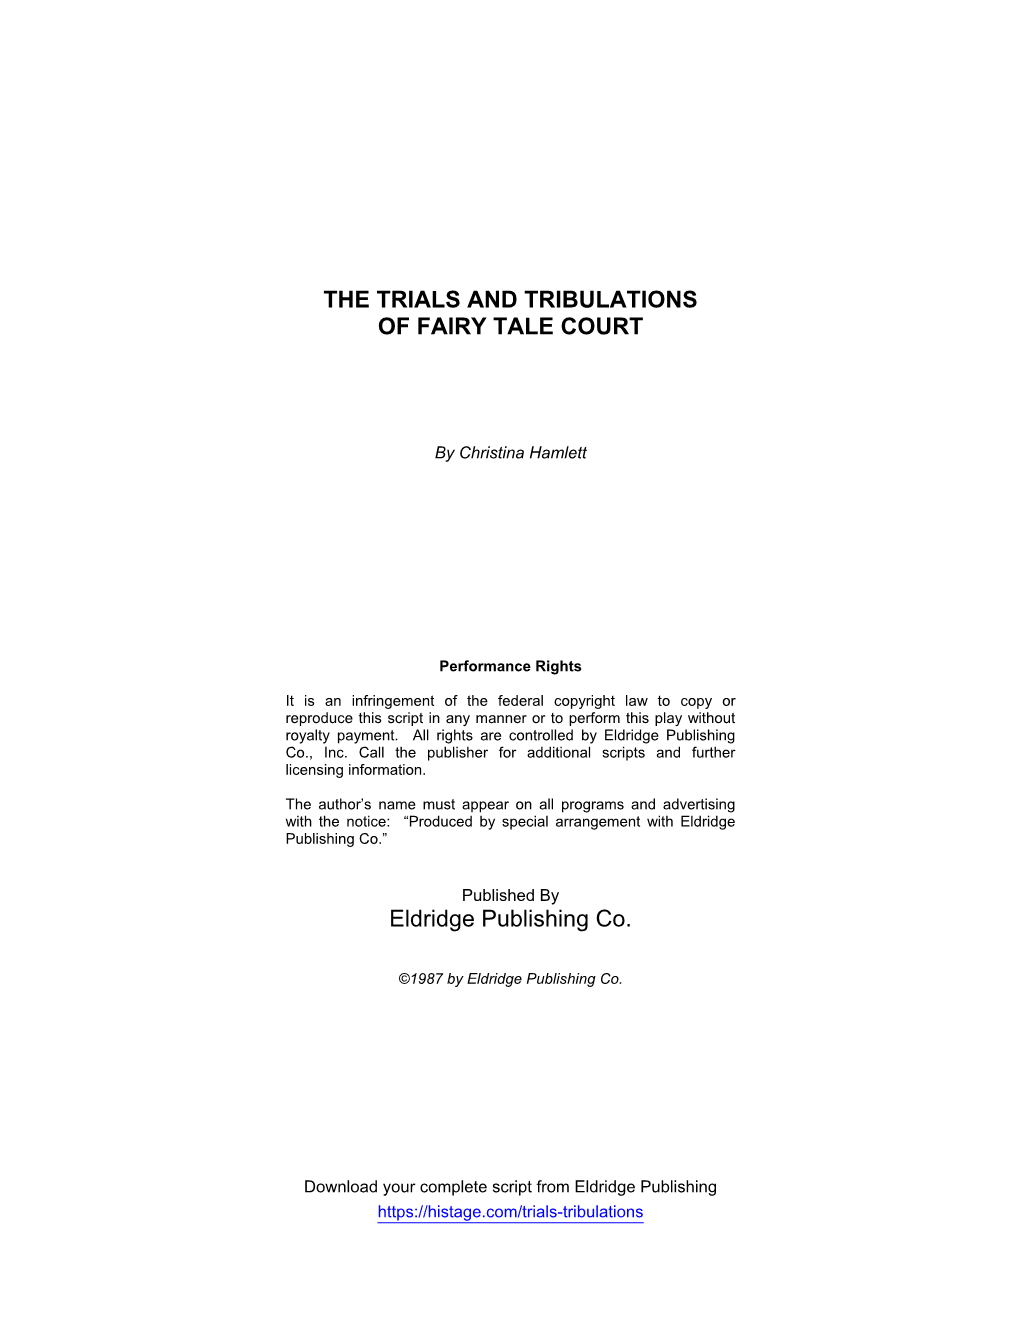 THE TRIALS and TRIBULATIONS of FAIRY TALE COURT Eldridge